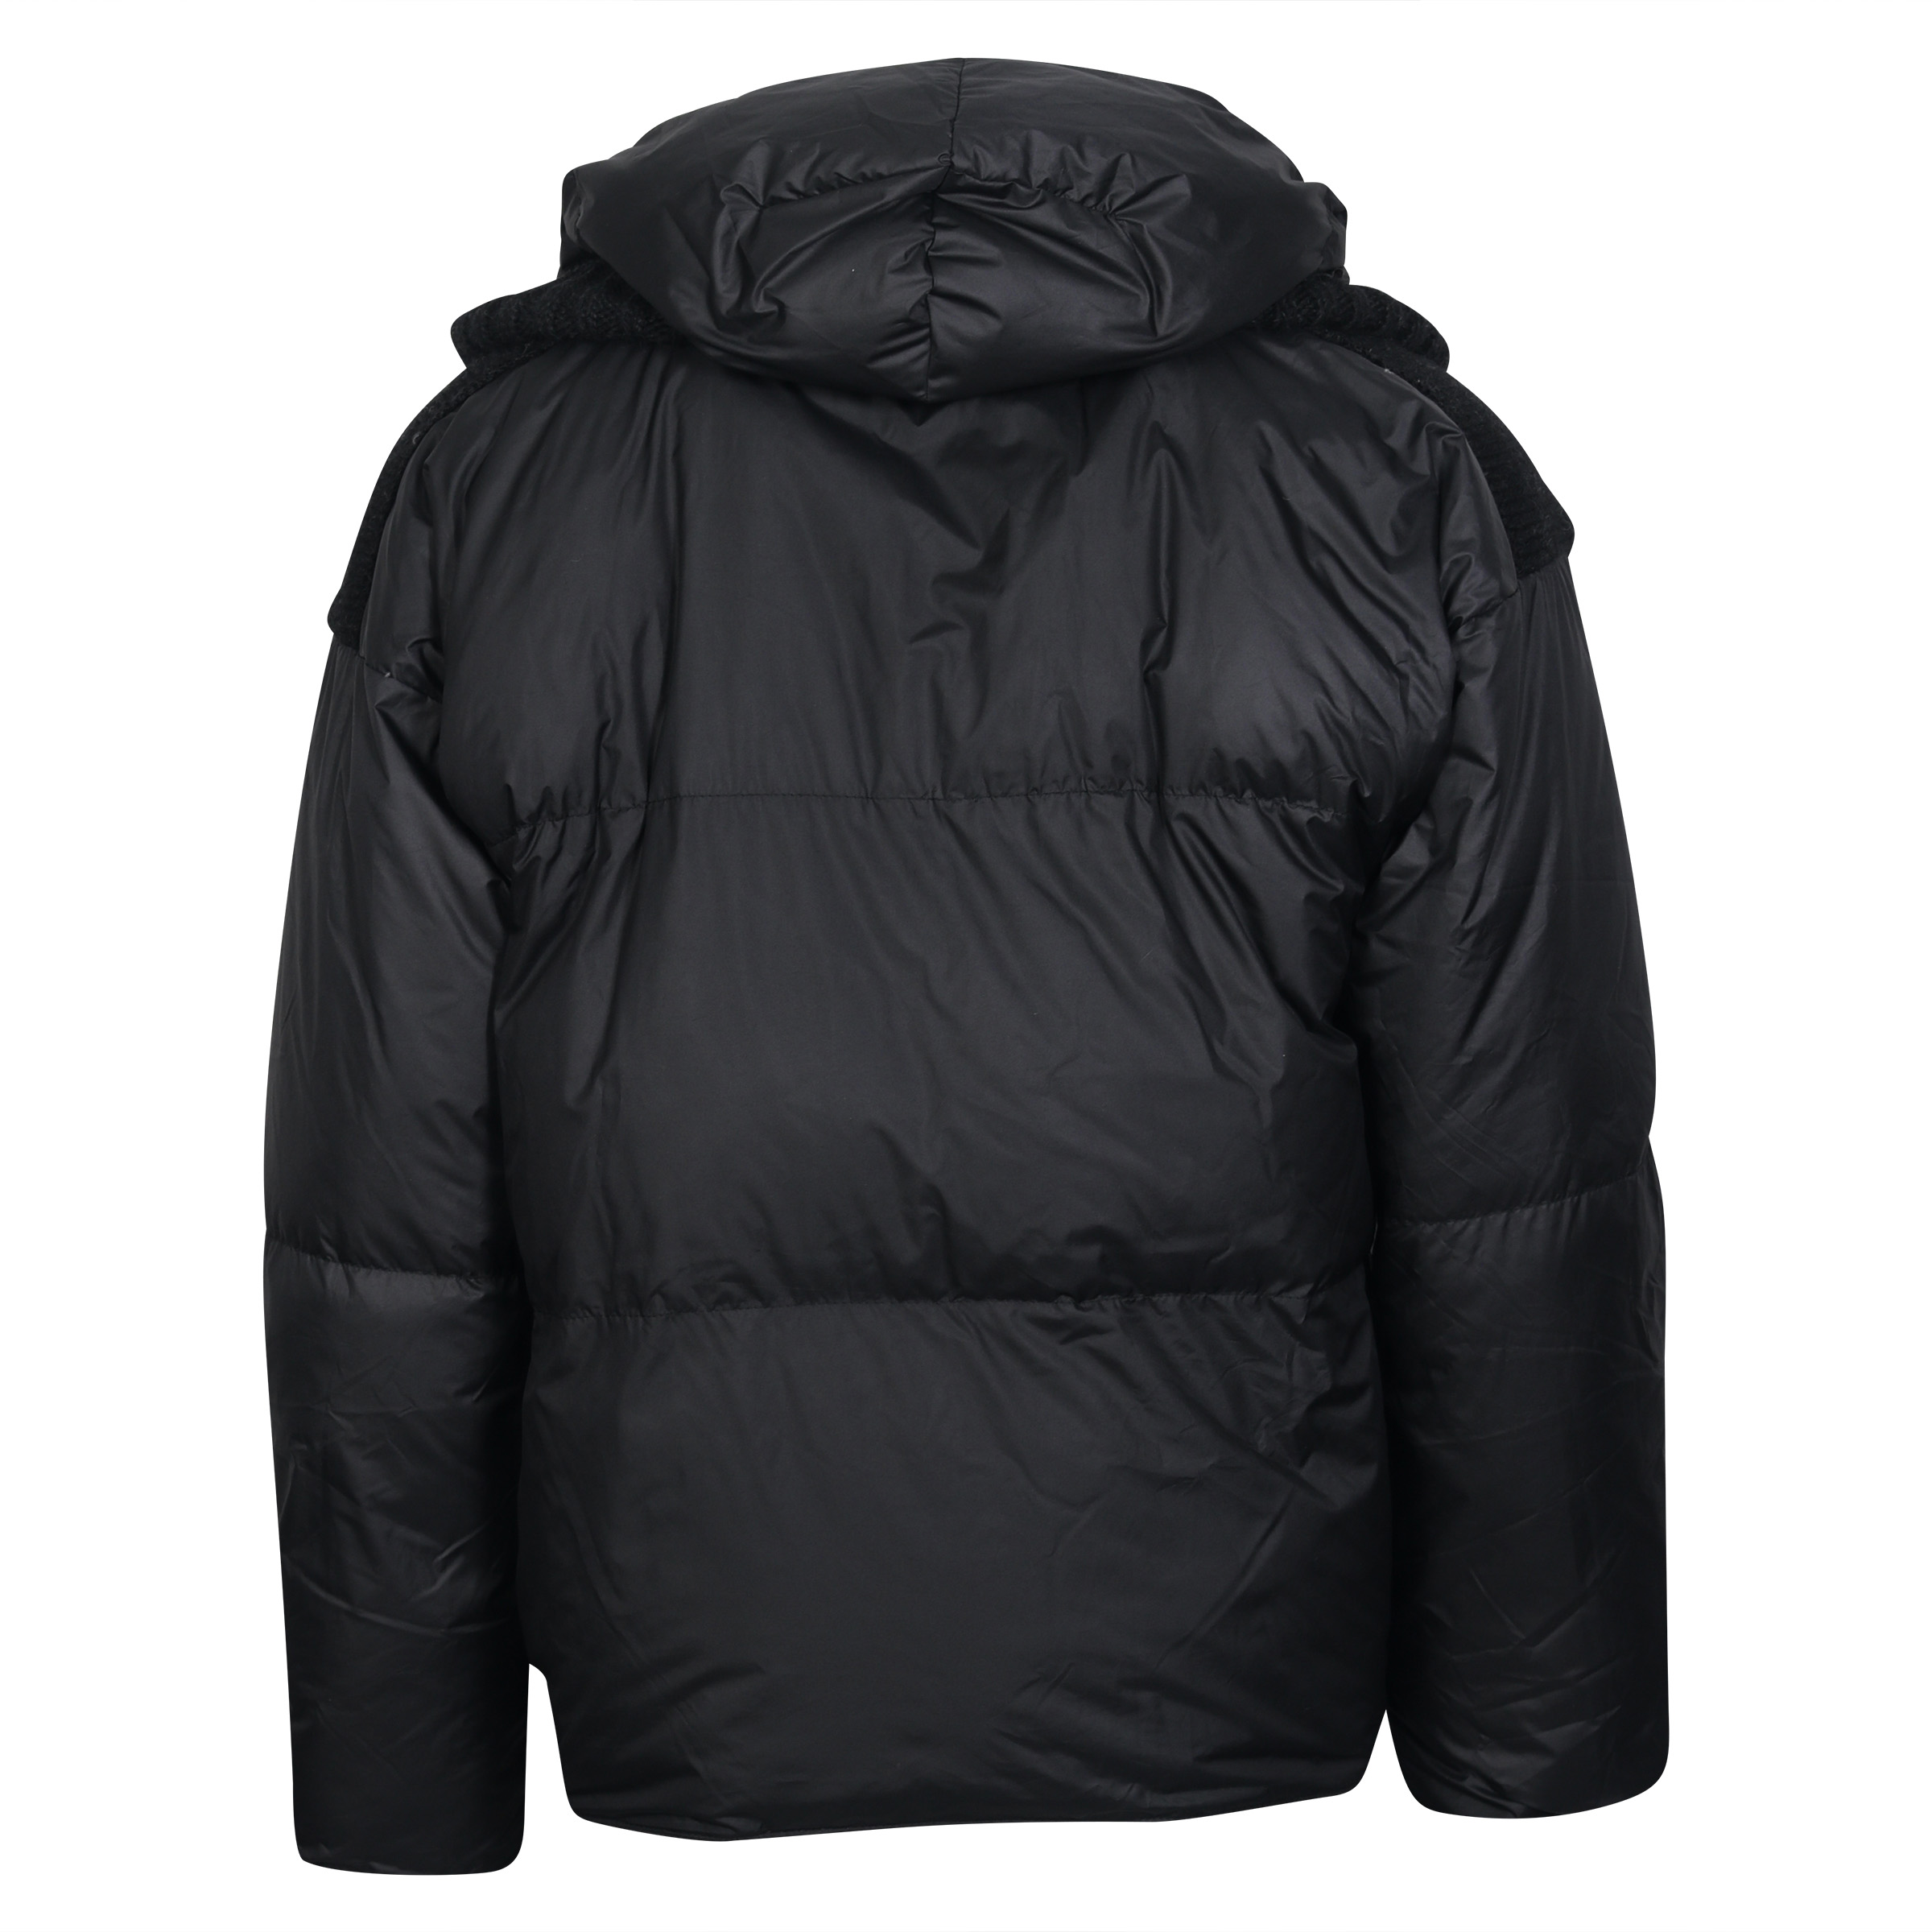 Transit Uomo Hooded Outdoor Jacket in Black